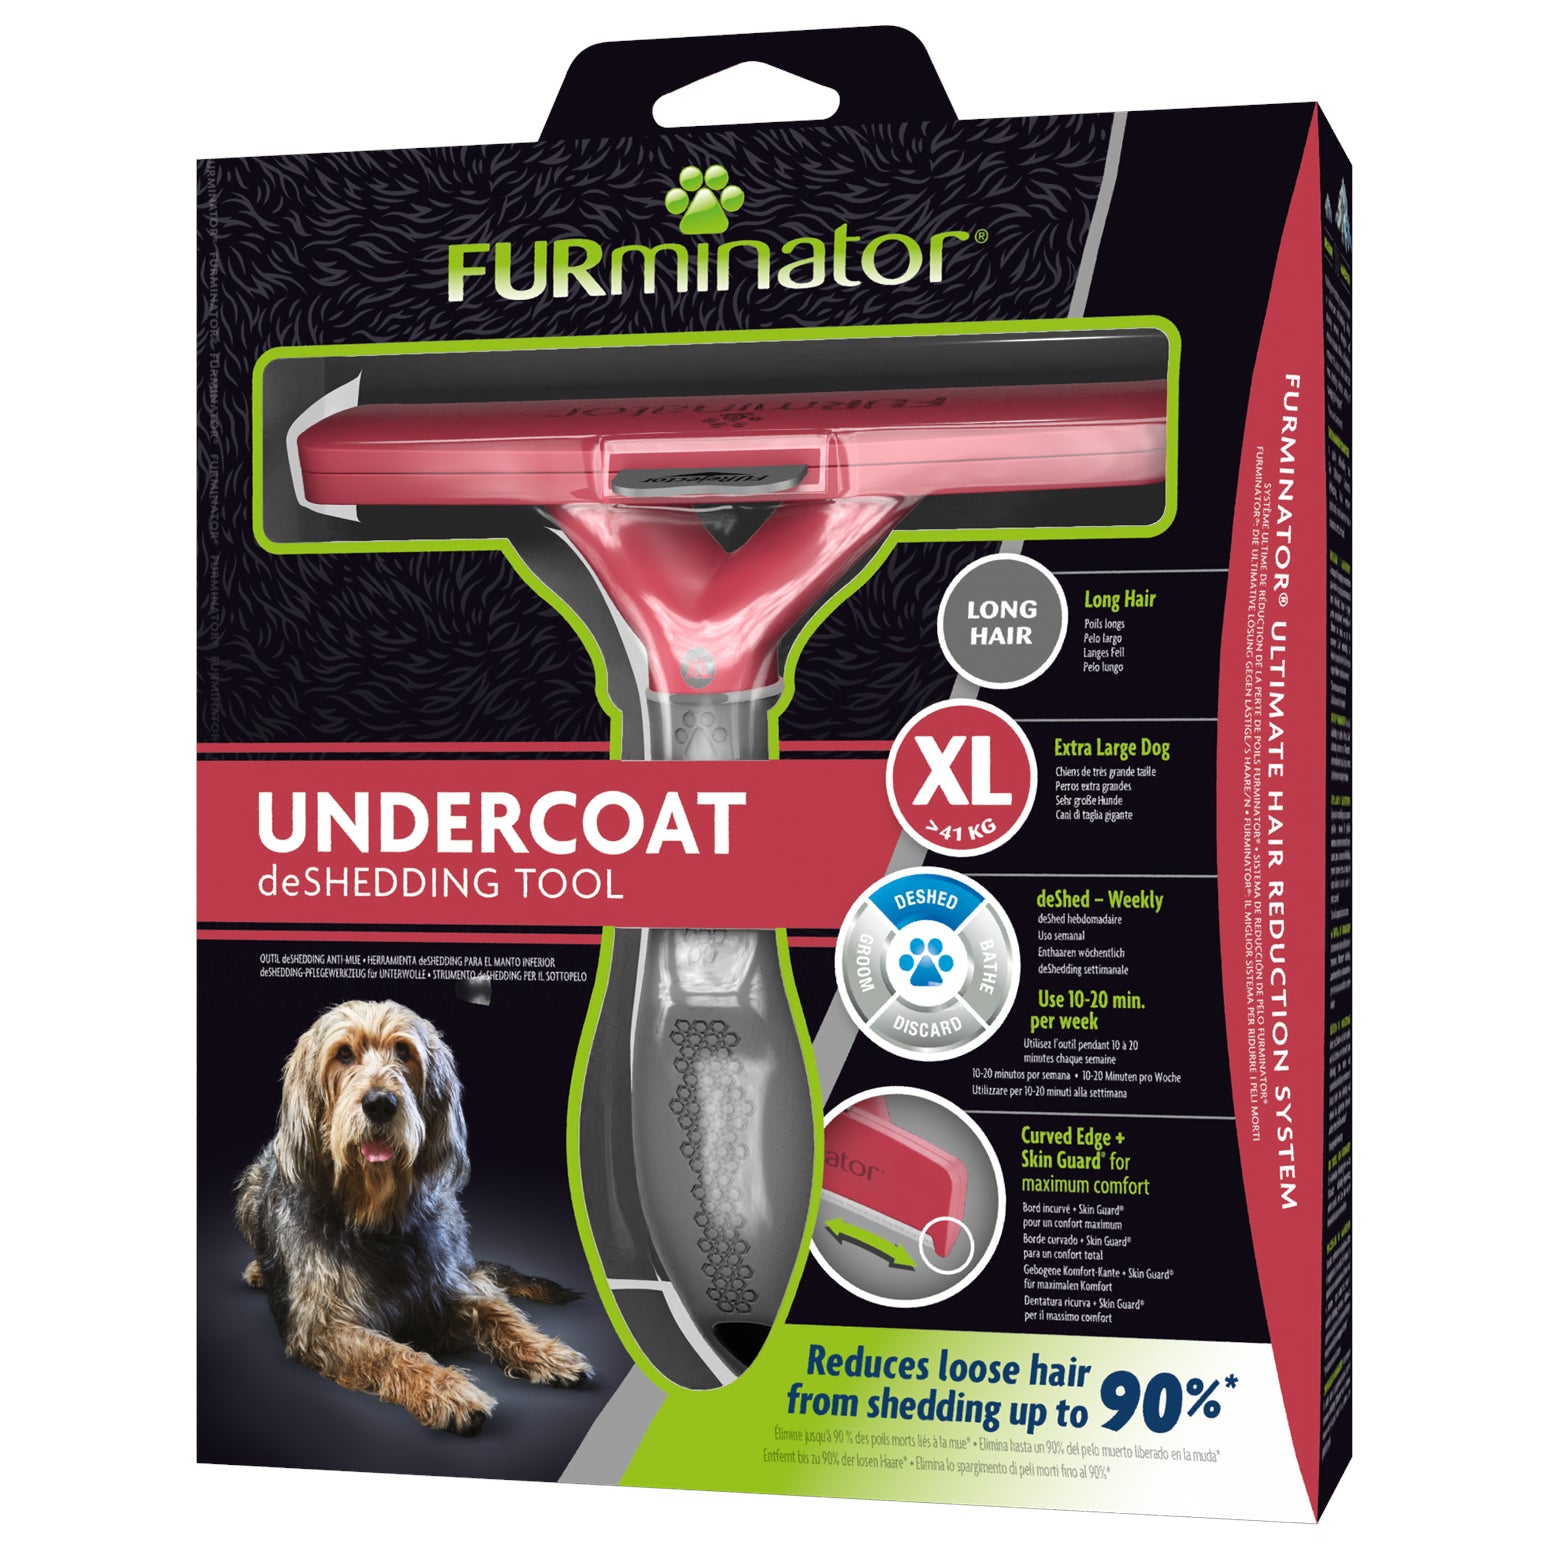 FURminator Undercoat deShedding Tools for X-Large Dogs